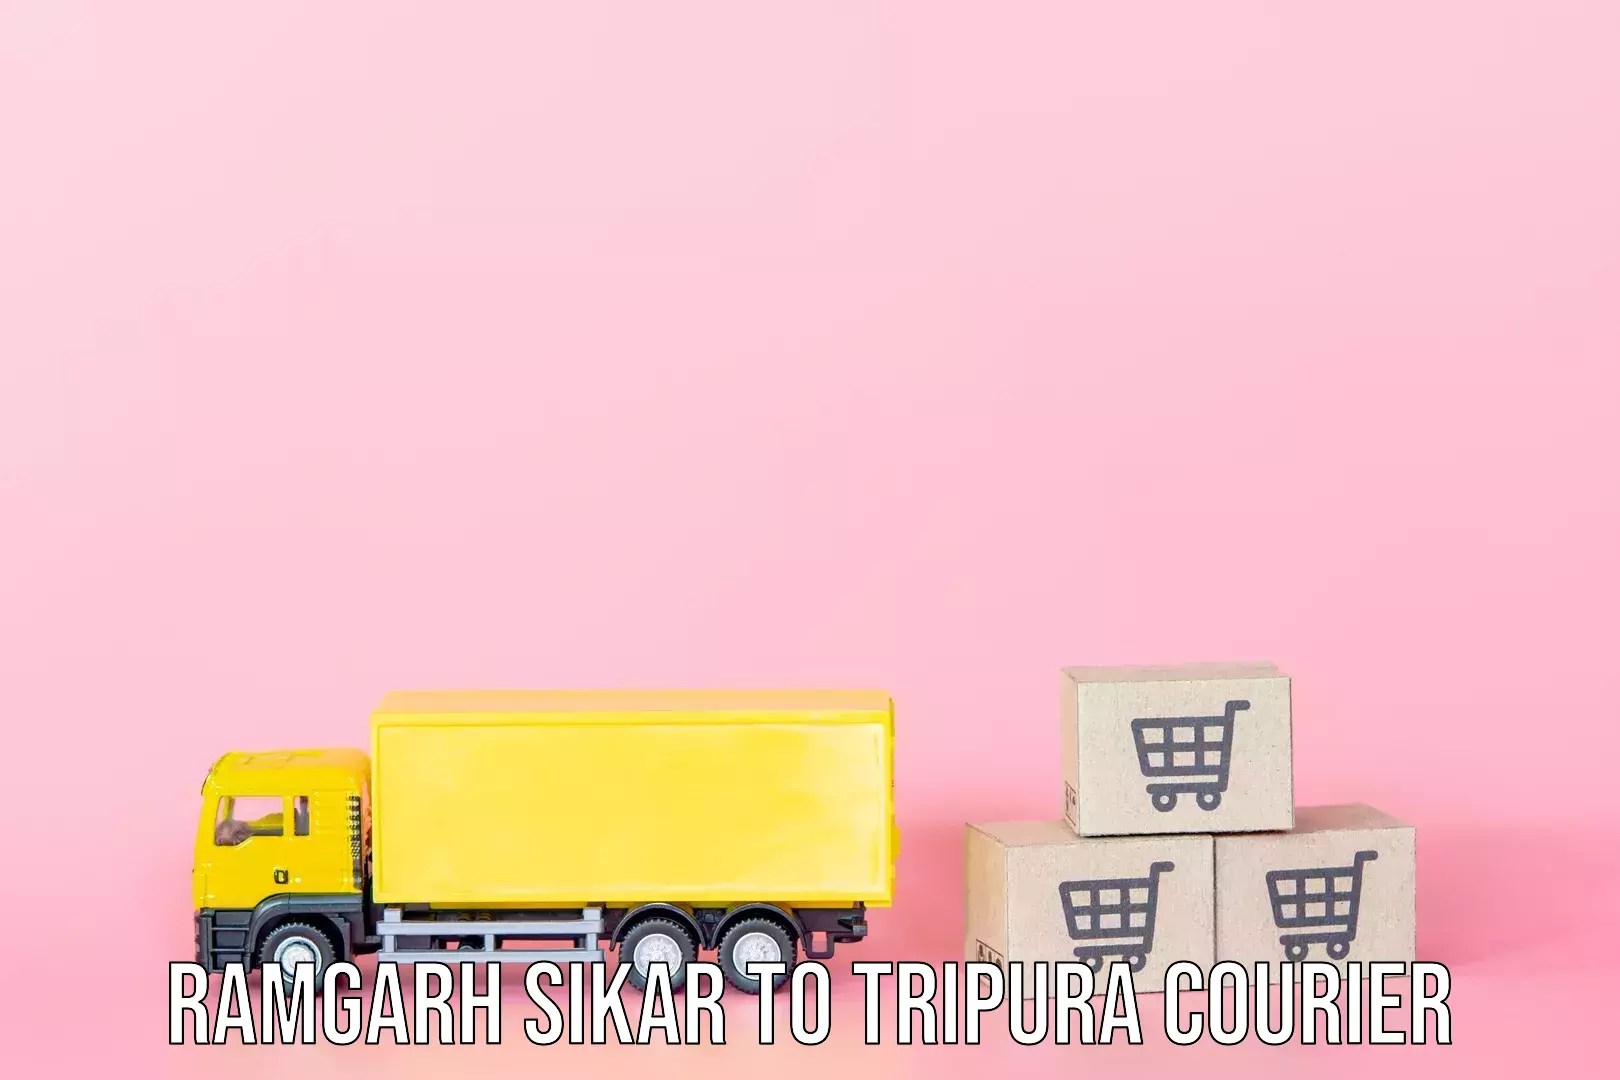 Emergency baggage service Ramgarh Sikar to Udaipur Tripura